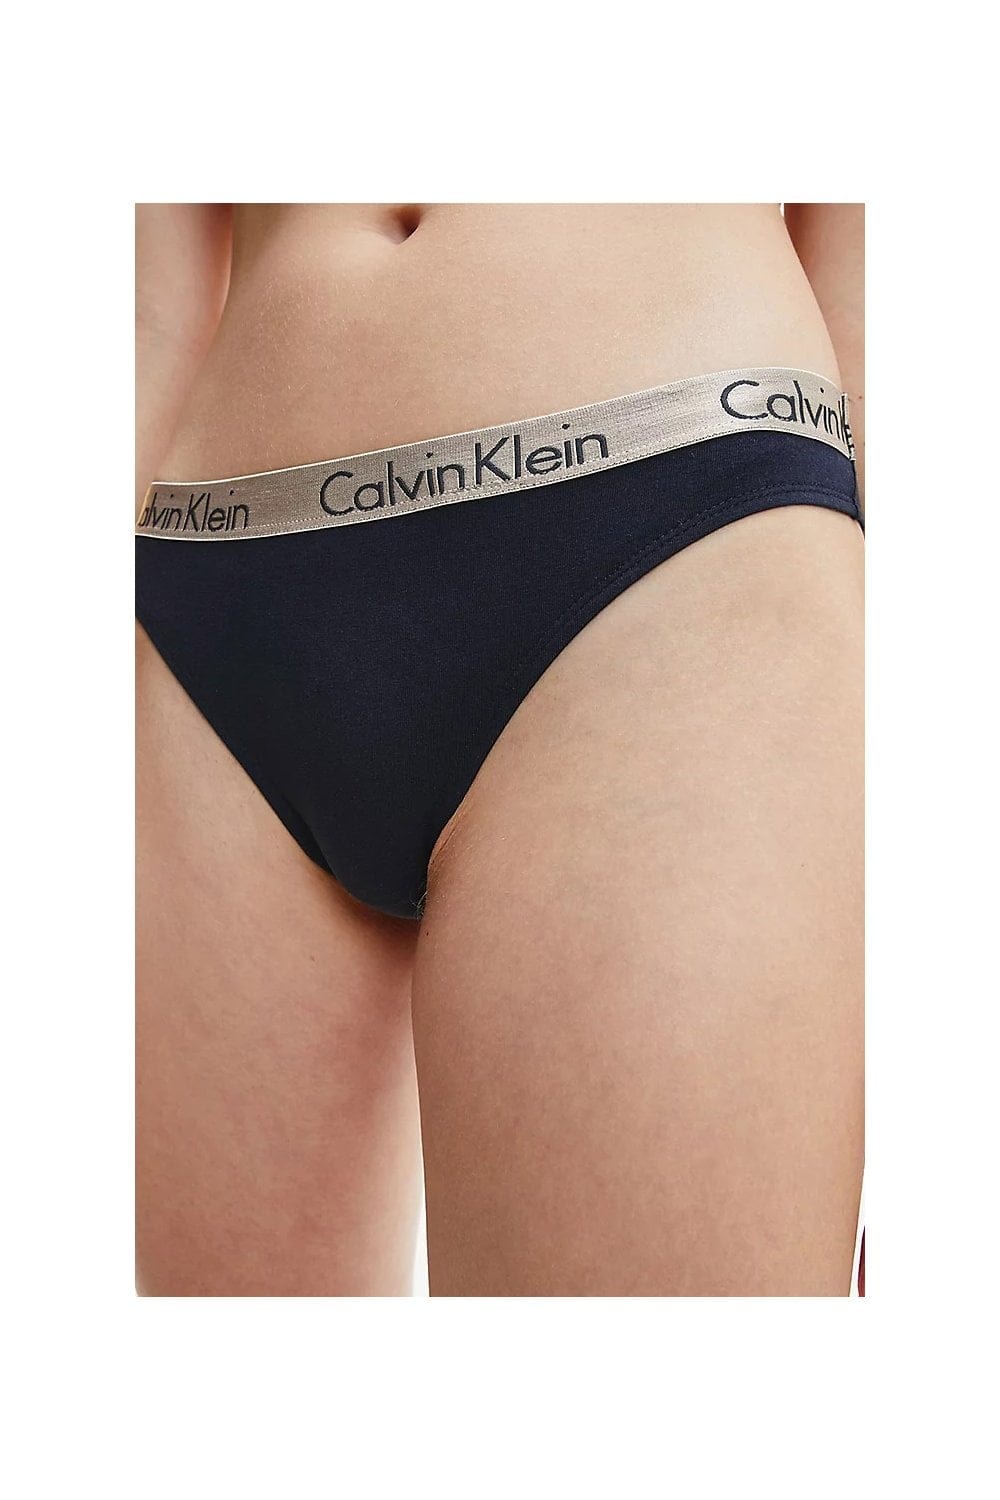 Calvin Klein Radiant Cotton Thong 3-Pack